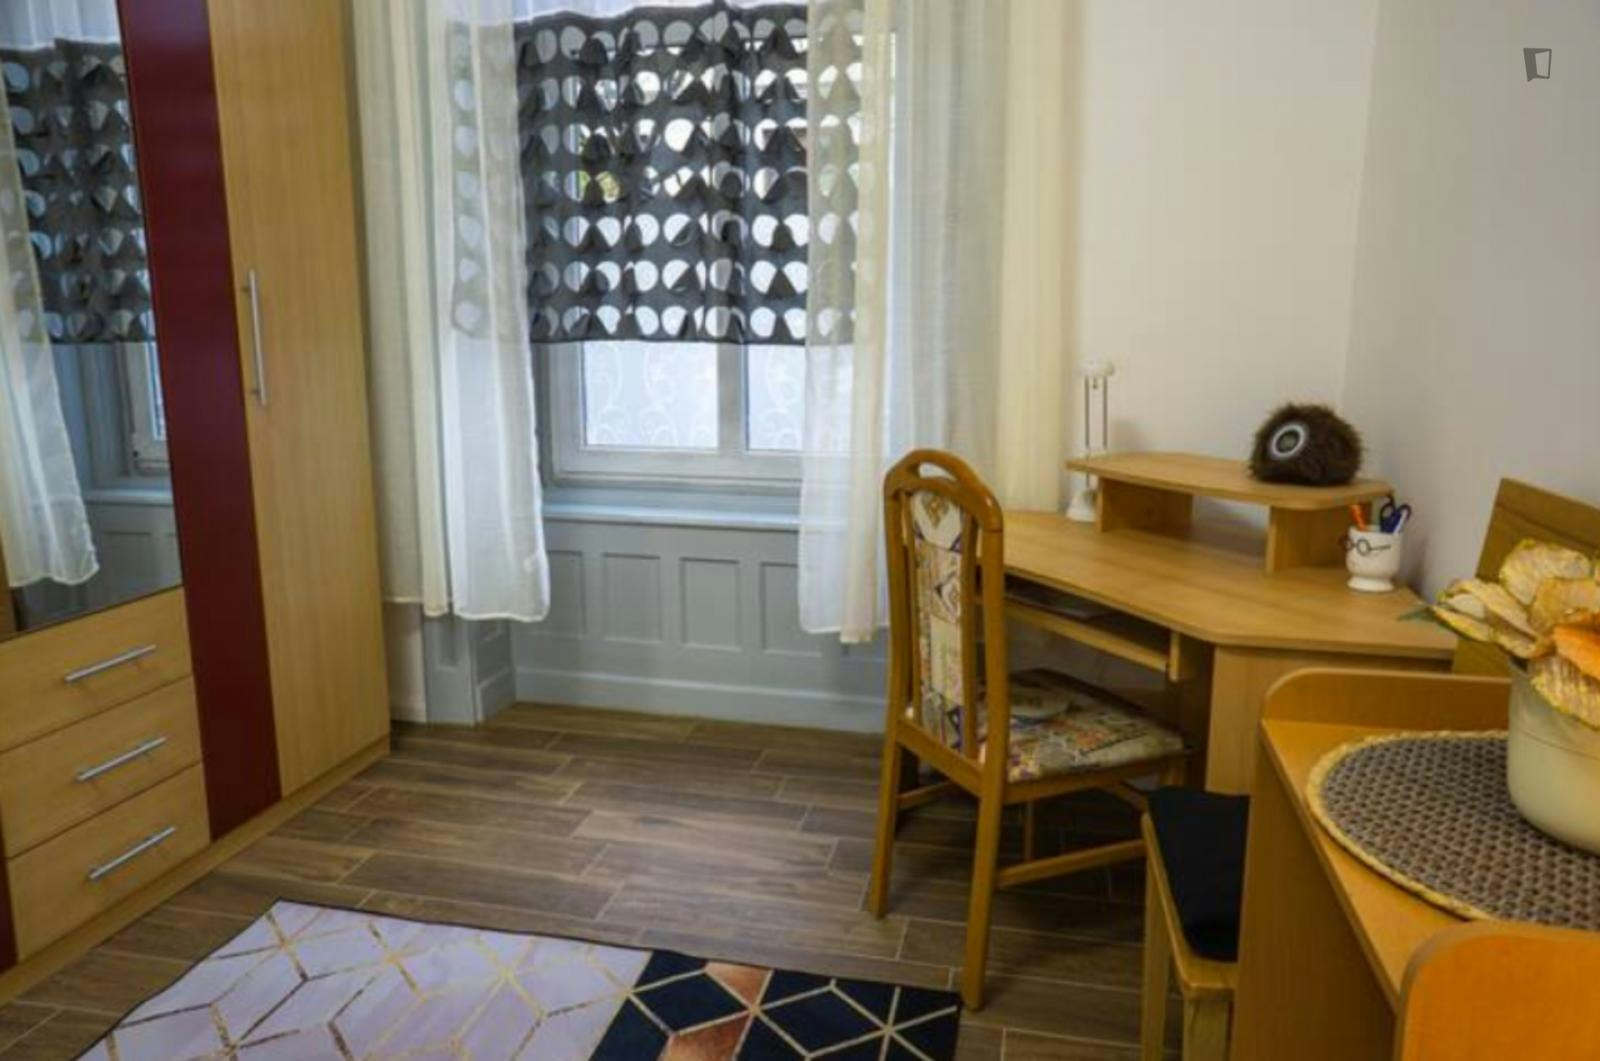 Homely 1-bedroom apartment next to Déli pályaudvar metro station